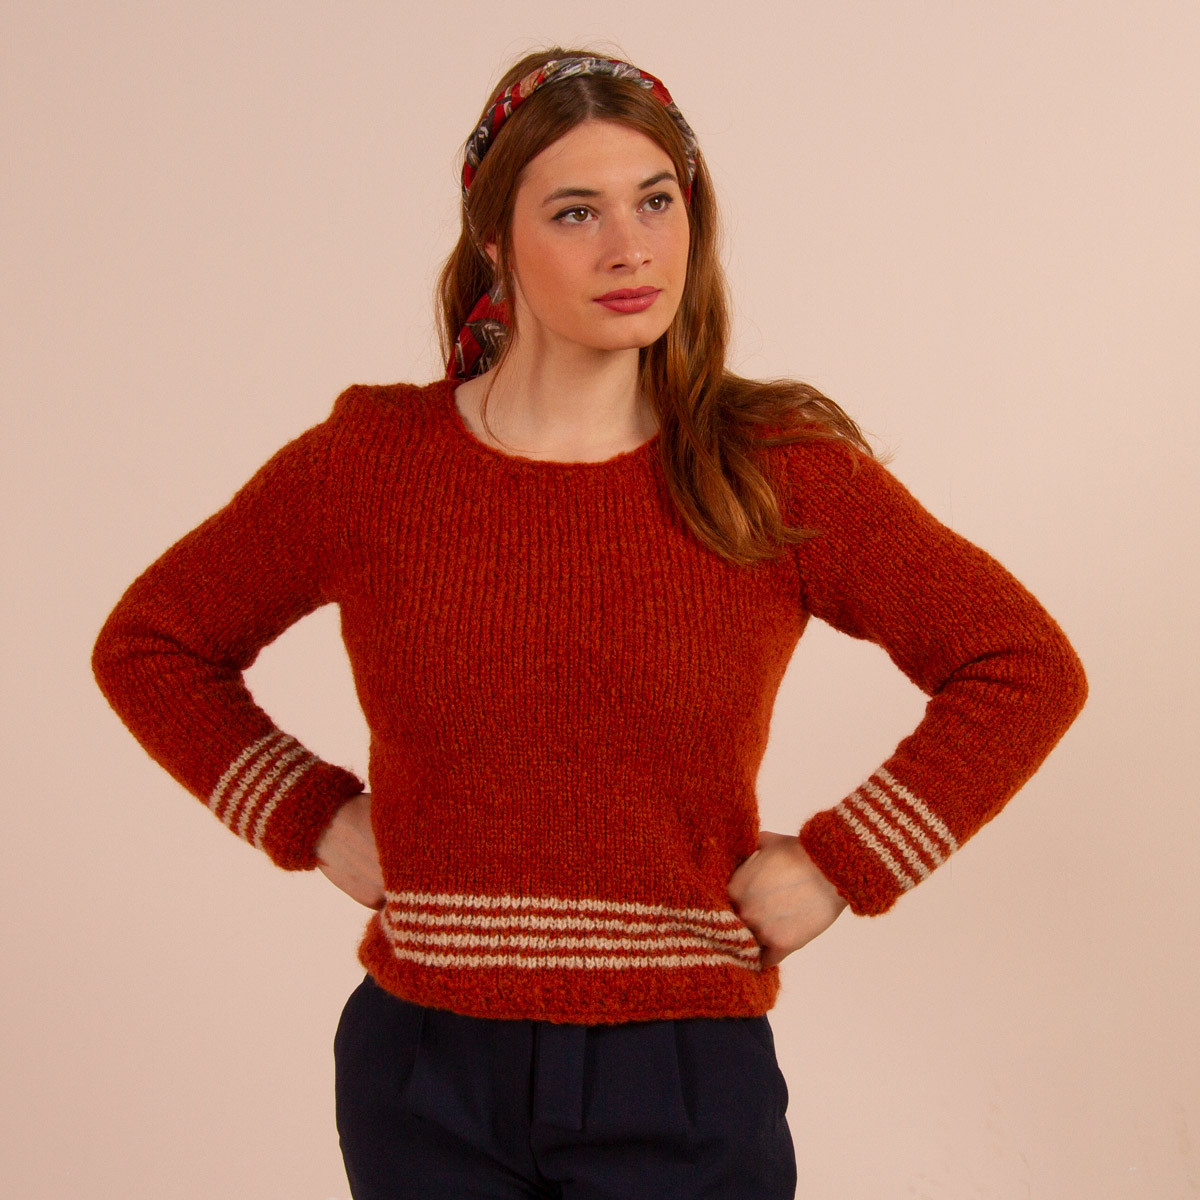 Women's sweater knitting pattern